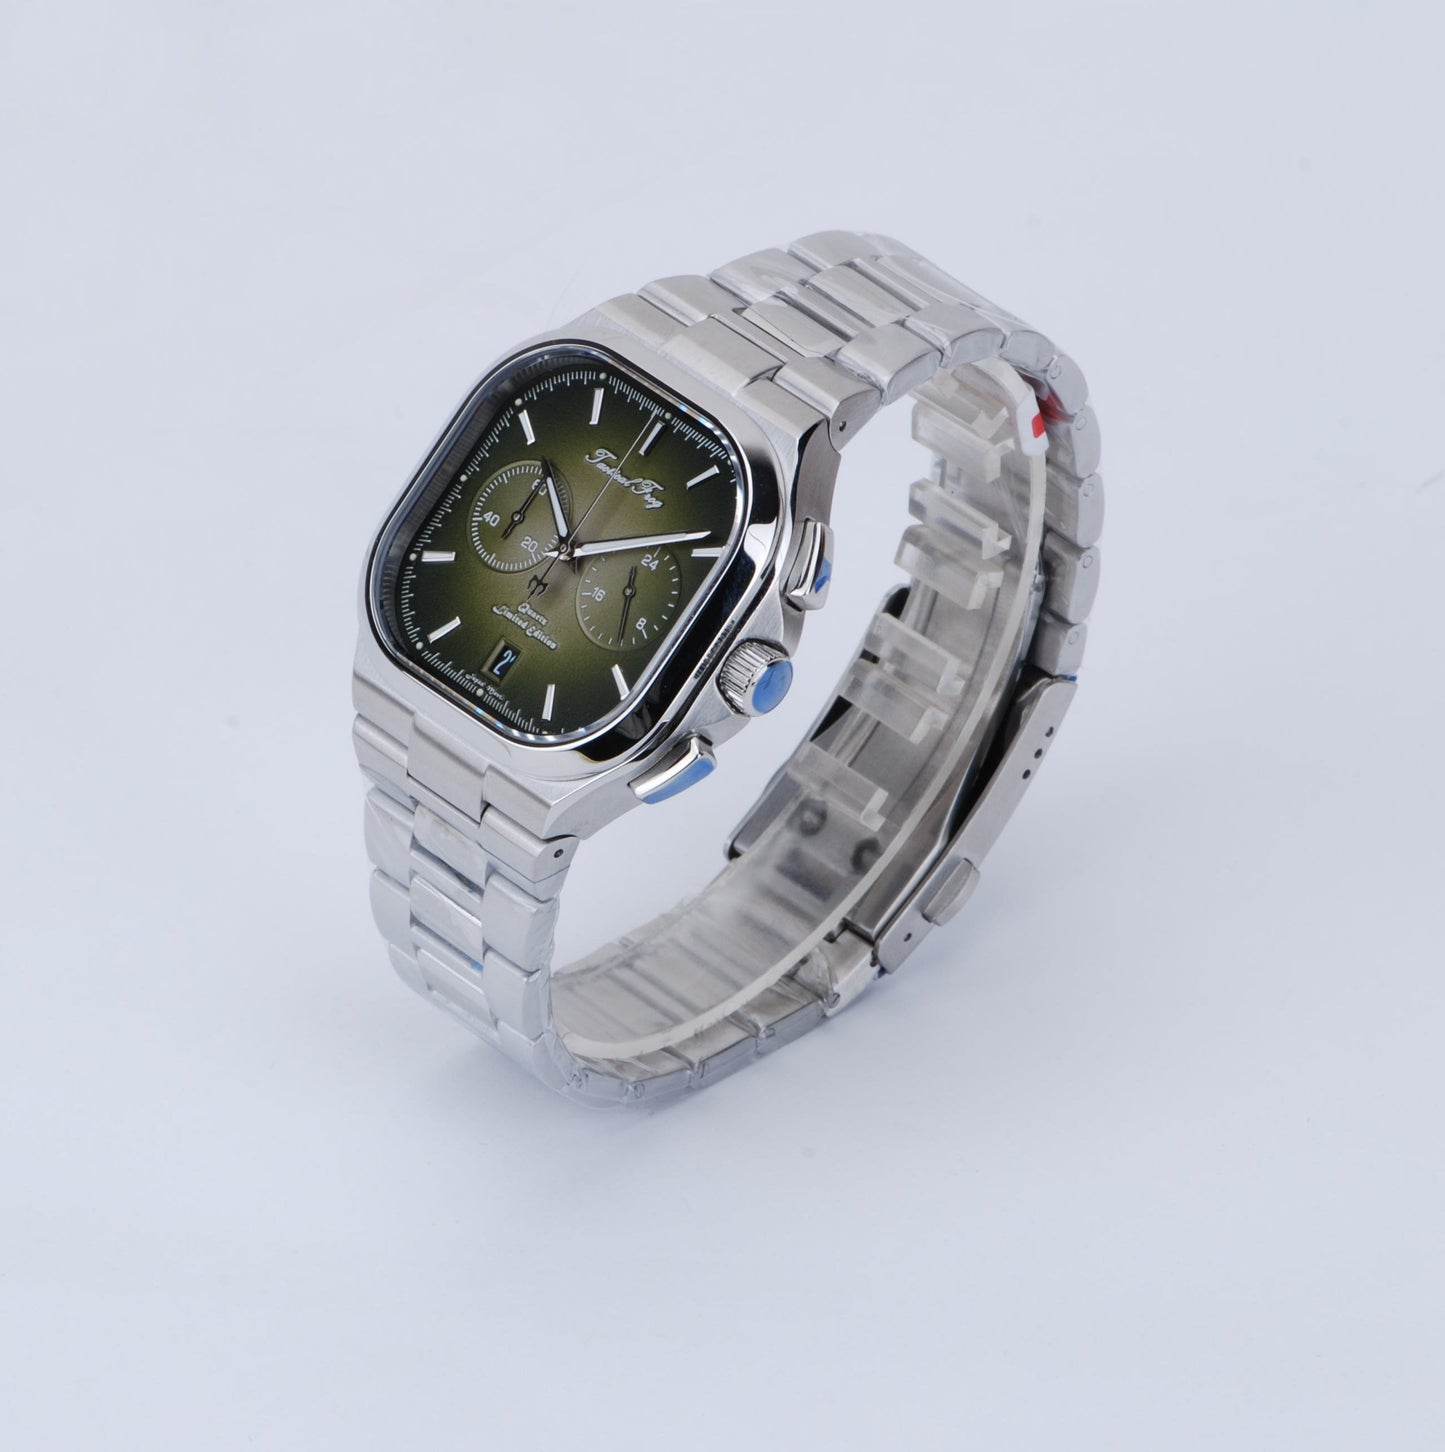 Tactical Frog VK64 Chronograph Quartz Watch